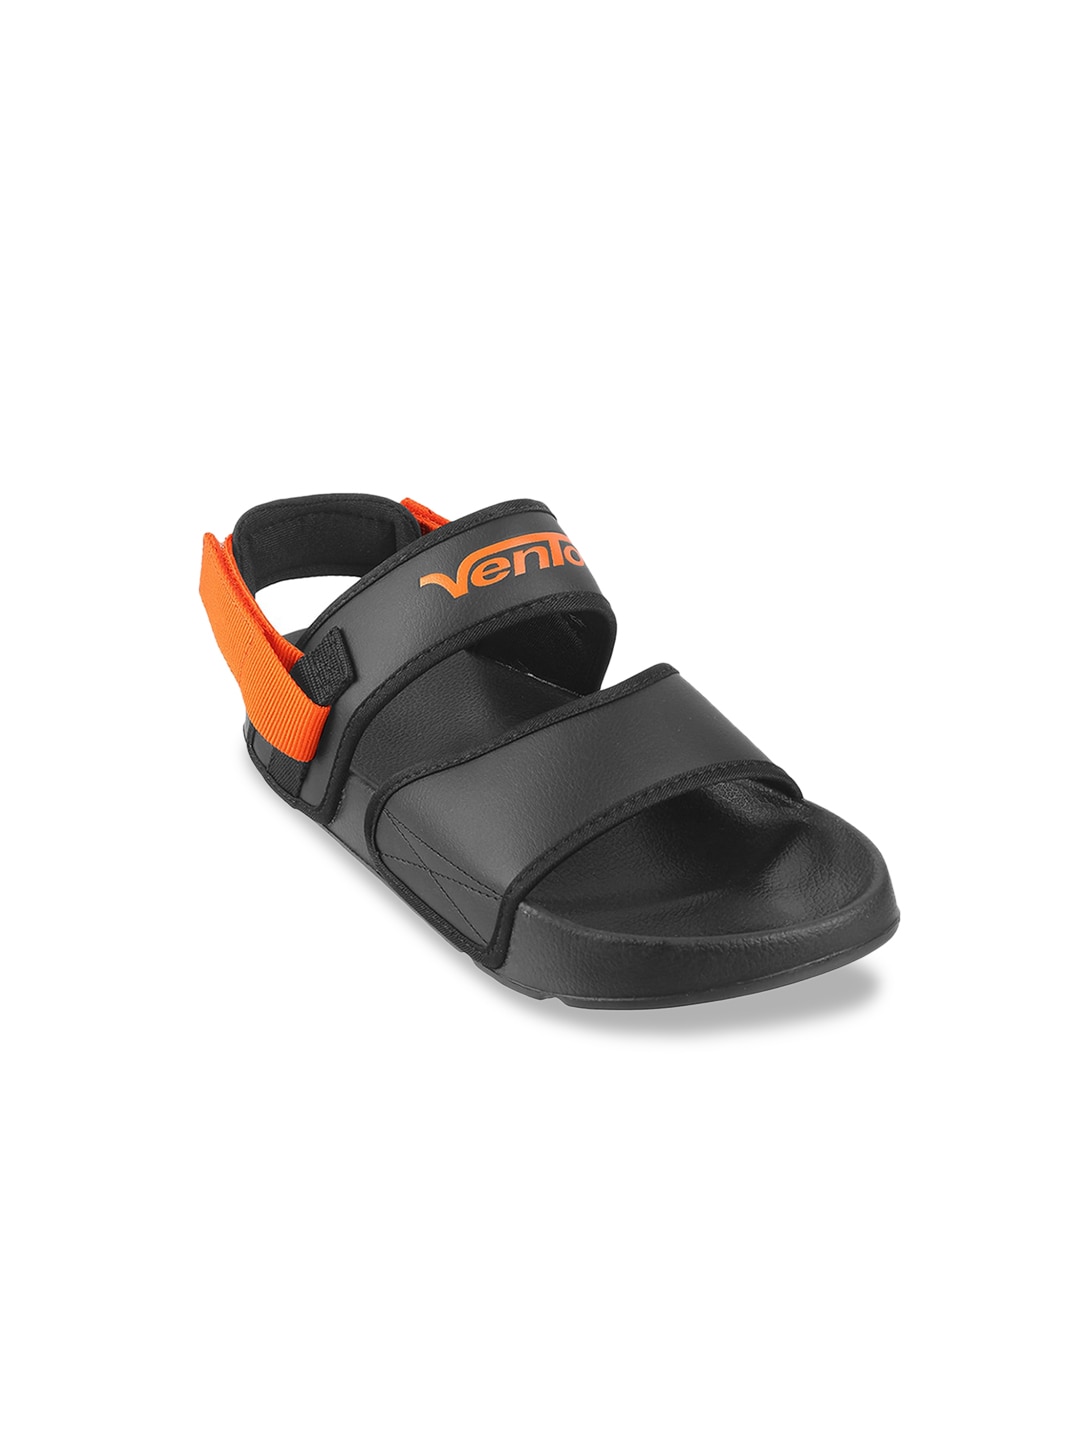 Vento Unisex Black & Orange Colourblocked Sports Sandals Price in India